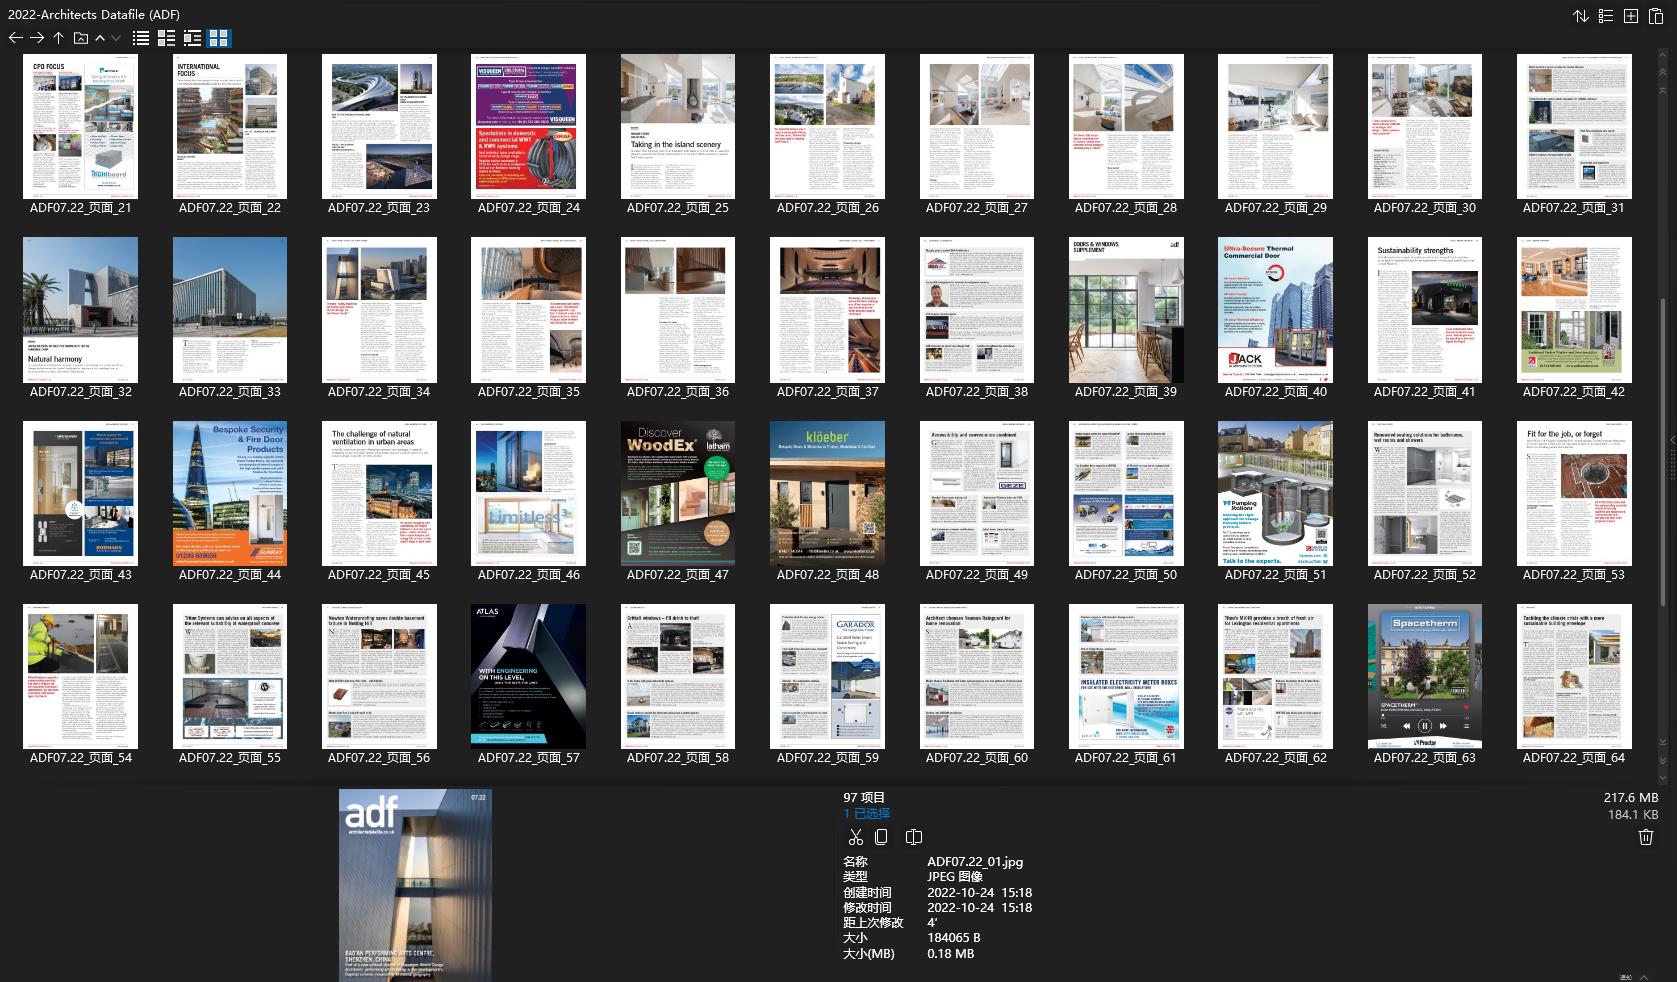 Architects Datafile (ADF),ADF建築雜誌,建築設計電子雜誌,雜誌下載,Architects Datafile,ADF